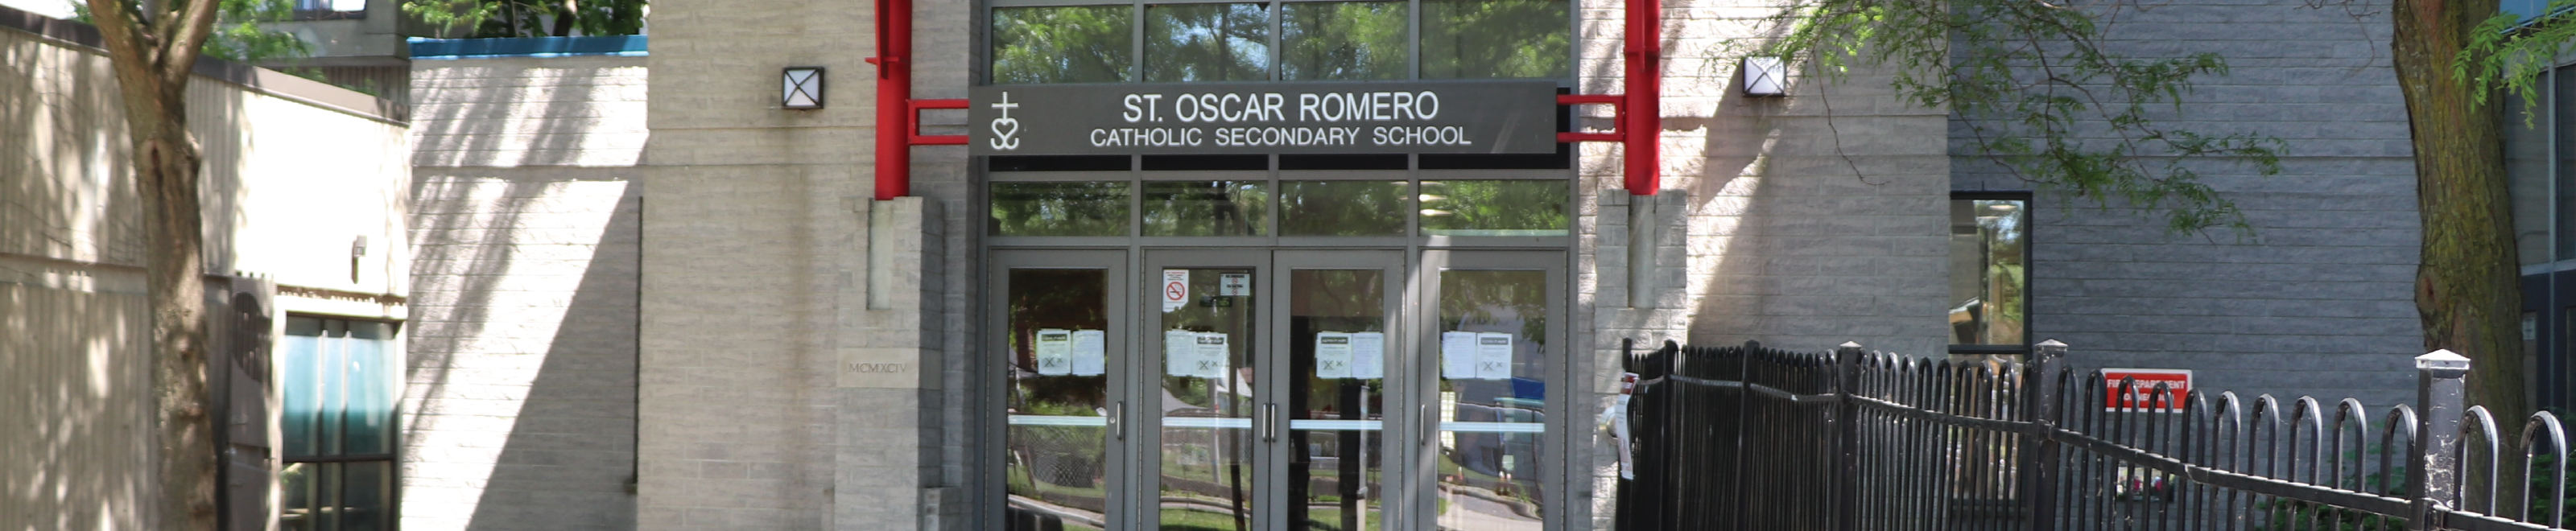 The front entrance of St. Oscar Romero Catholic Secondary School.